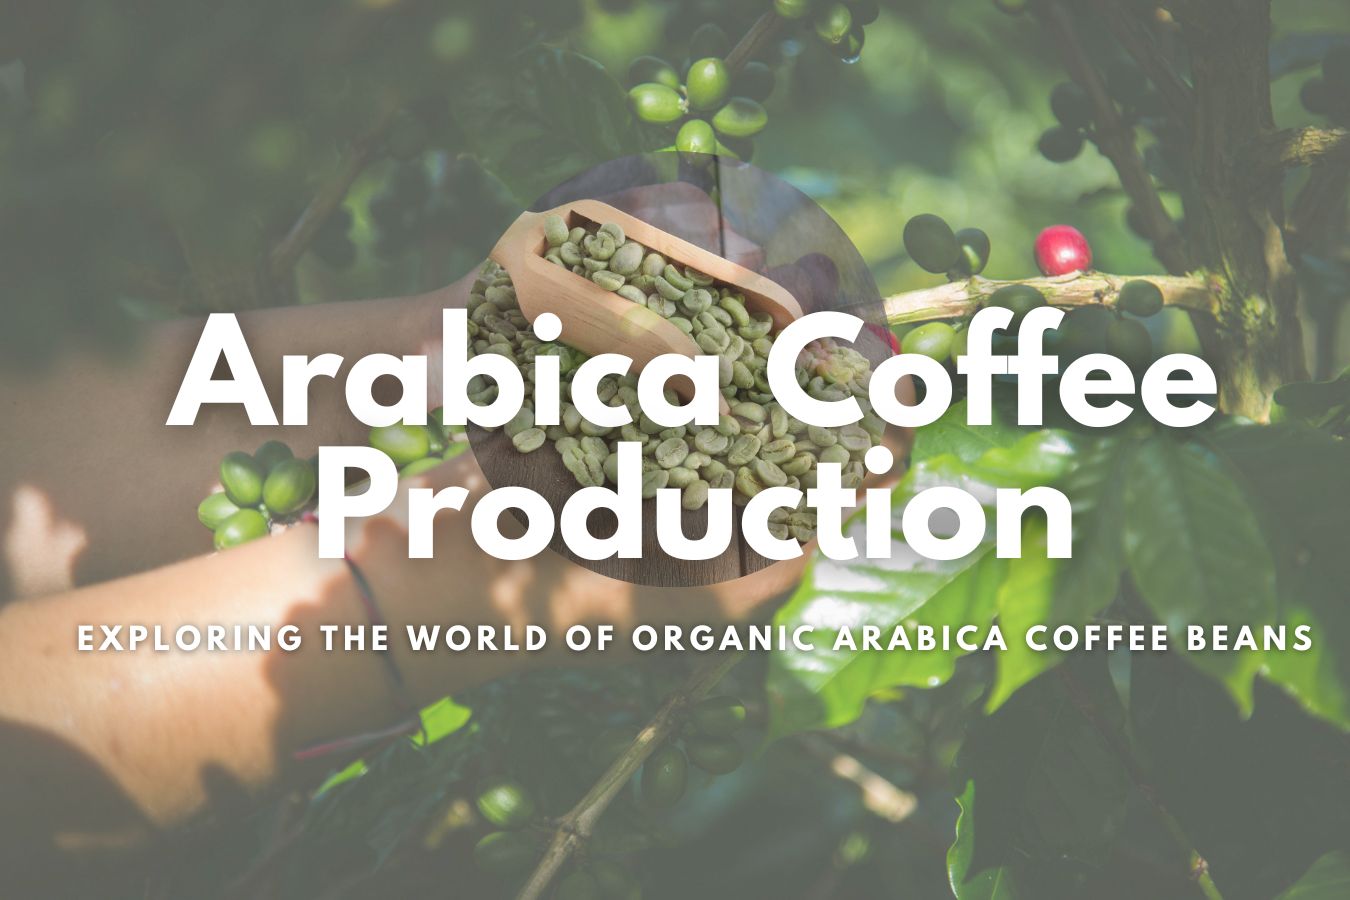 Arabica Coffee Production Exploring the World of Organic Arabica Coffee Beans